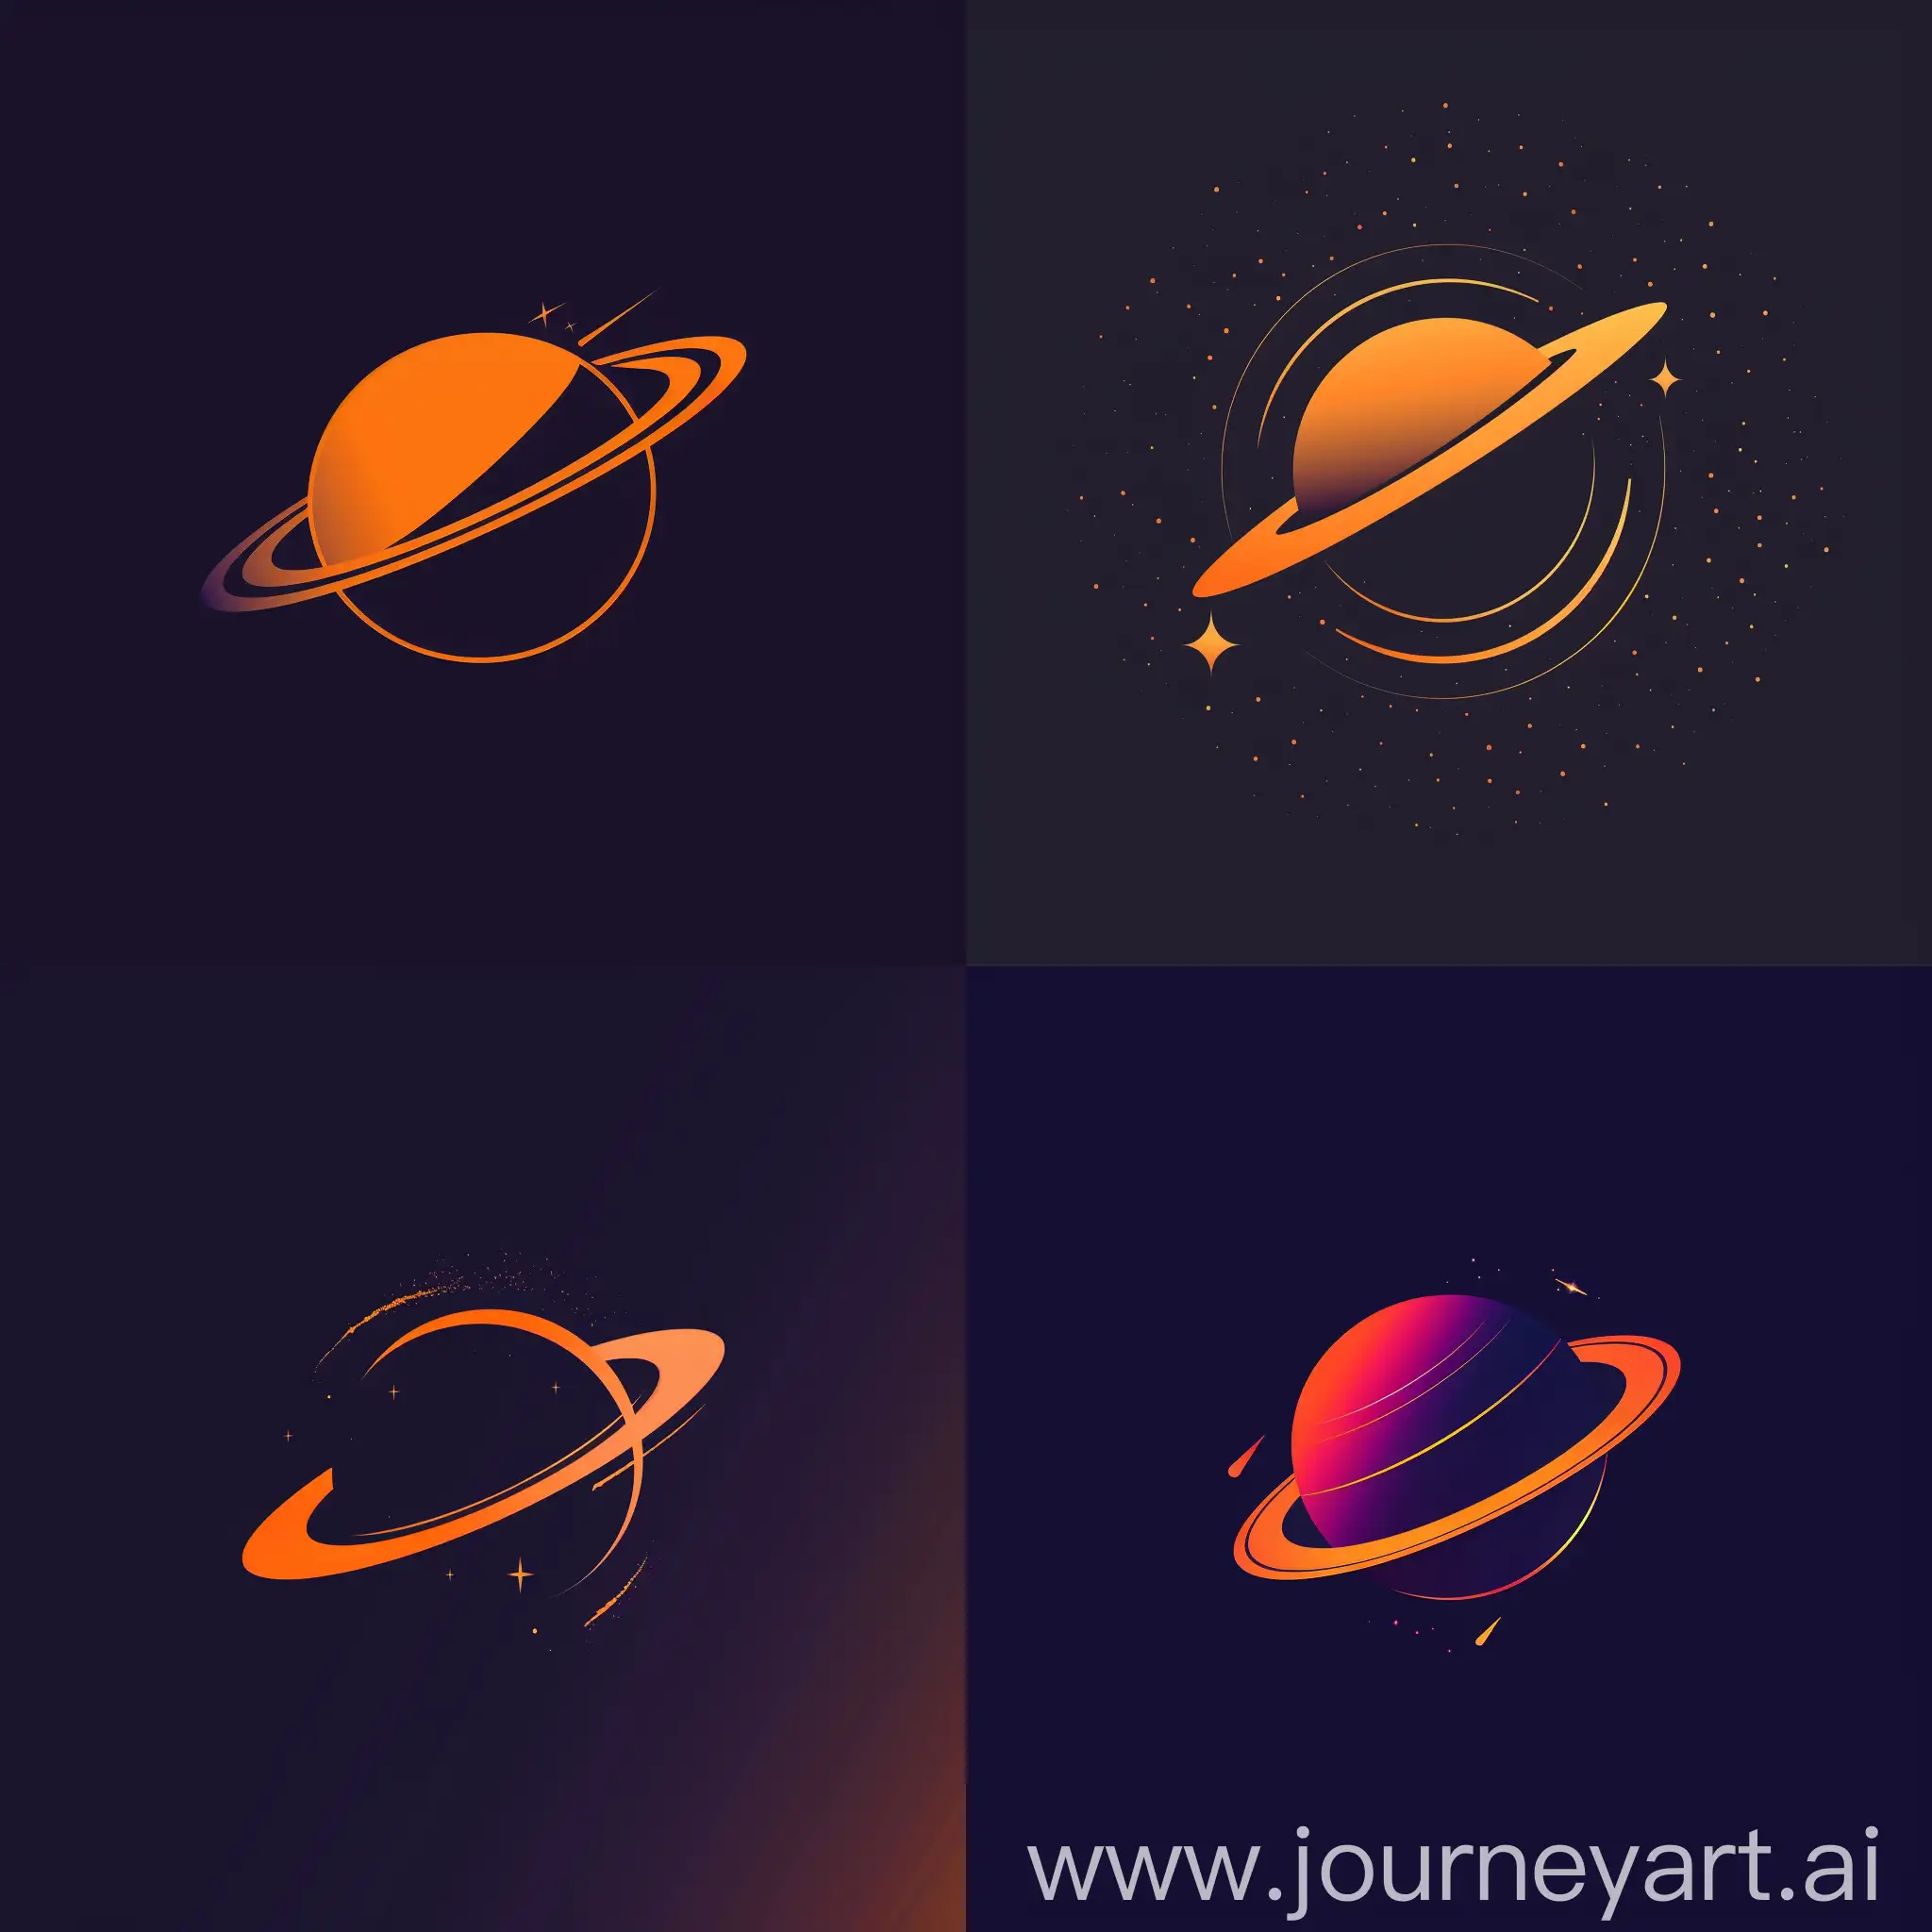 Minimalist-2D-Saturn-Logo-on-PurpleBlack-Cosmos-Background-with-Falling-Star